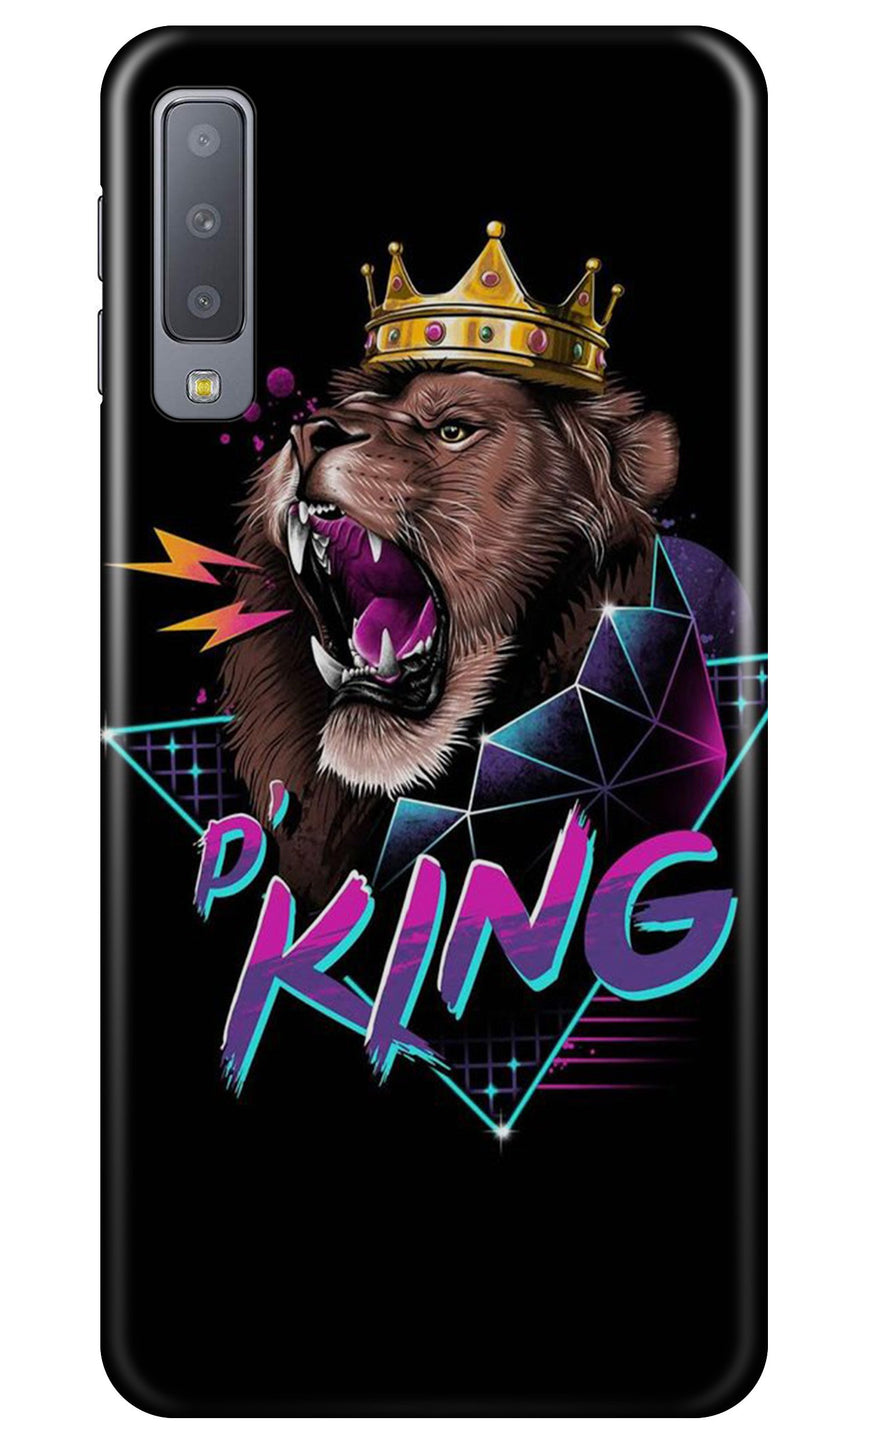 Lion King Case for Samung Galaxy A70s (Design No. 219)